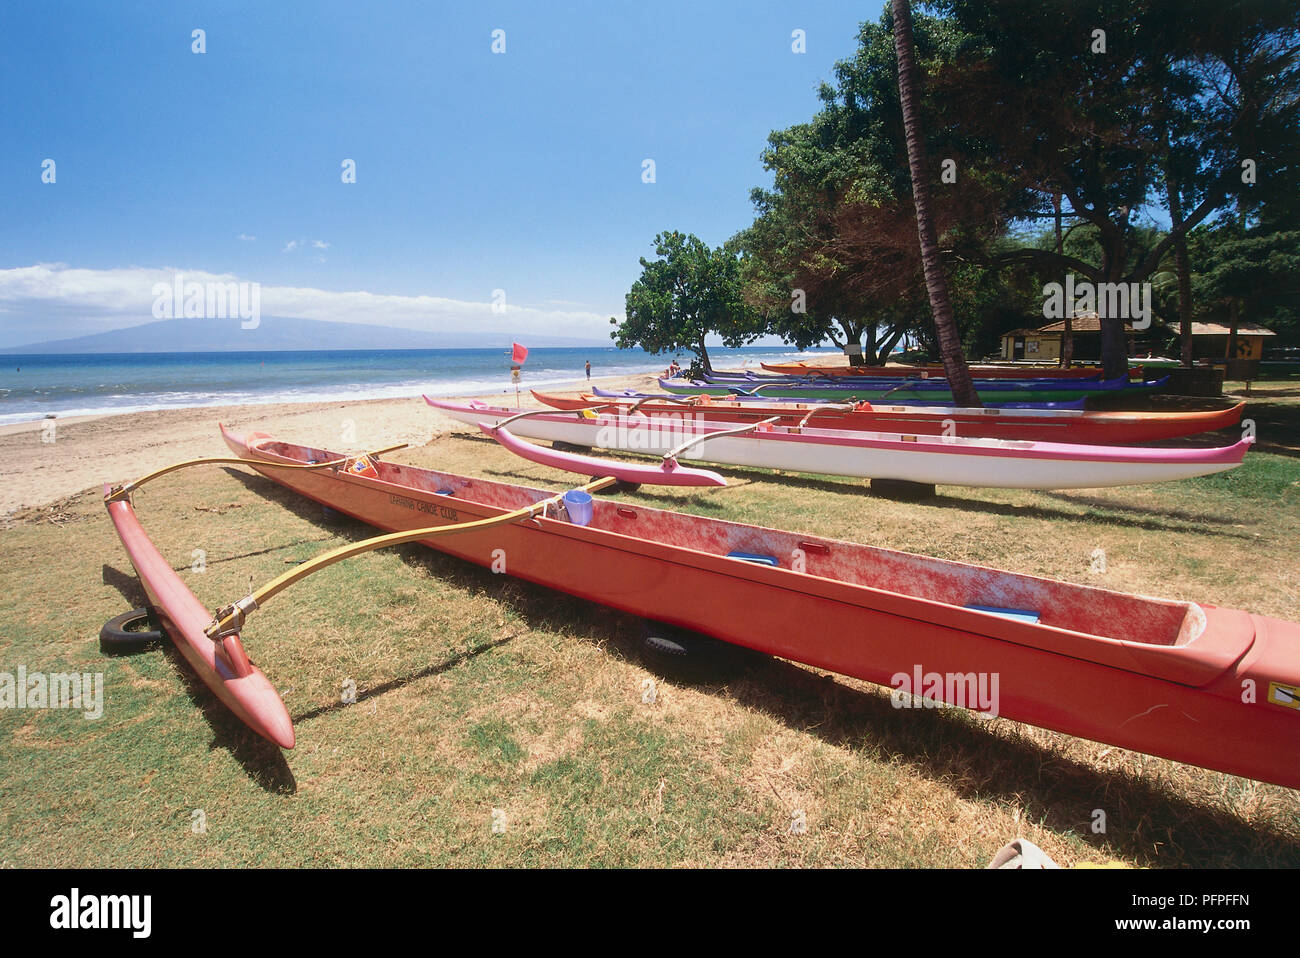 USA, Hawaii Islands, West Maui, Keka'a Beach, red and white Hawaiian canoes on grass overlooking Pacific Ocean Stock Photo